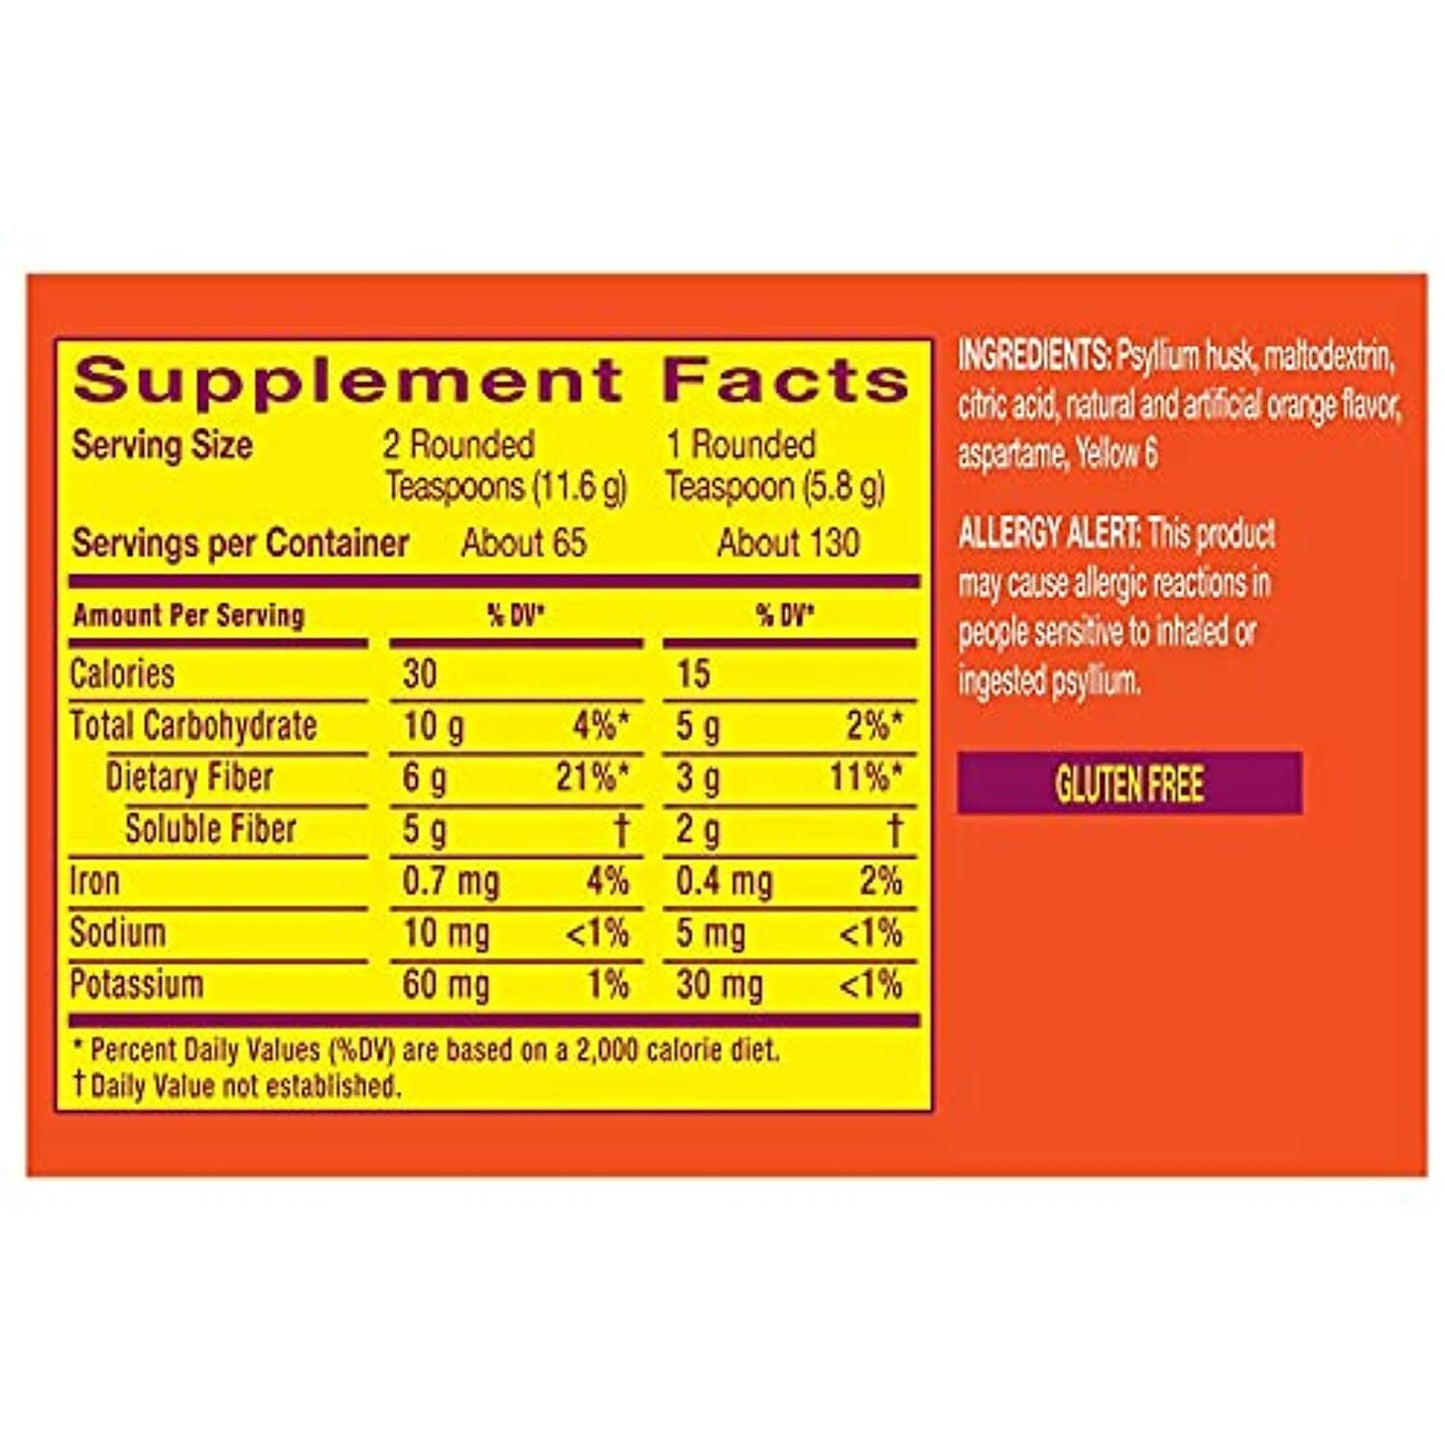 Meta Mucil Sugar Free Fiber Supplement Smooth Powder, Orange - 260 Teaspoons